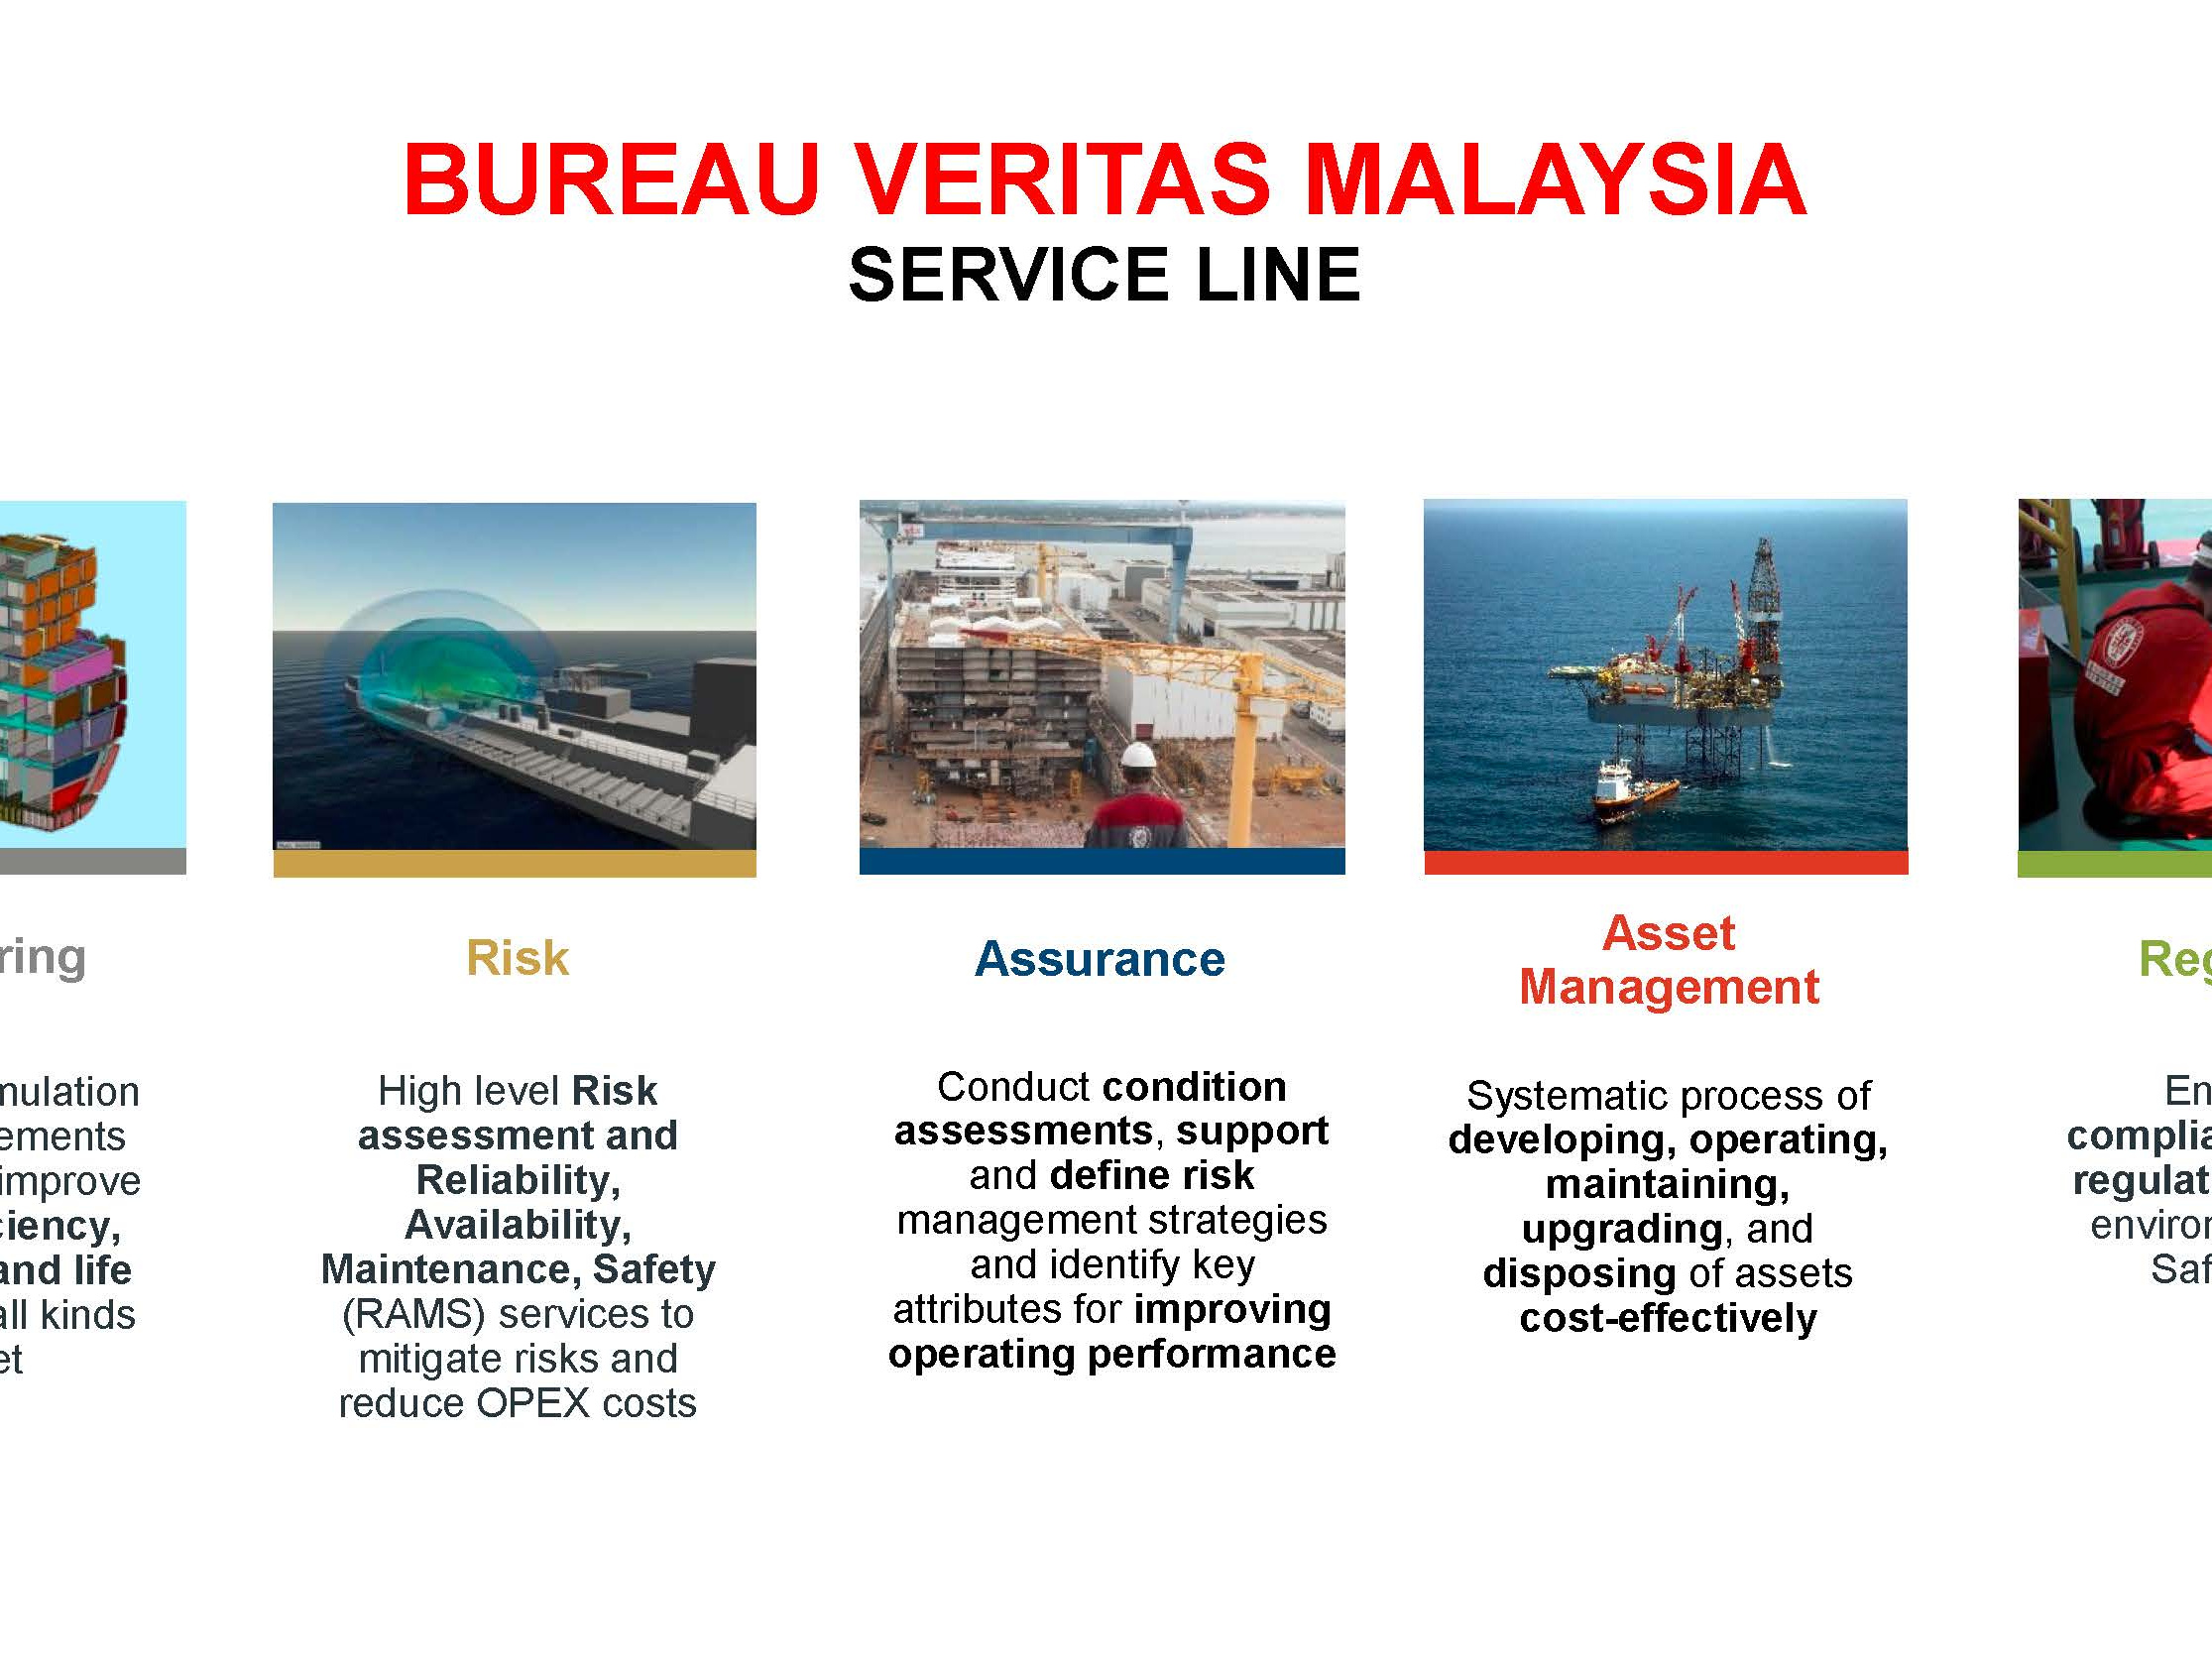 BVM service lines